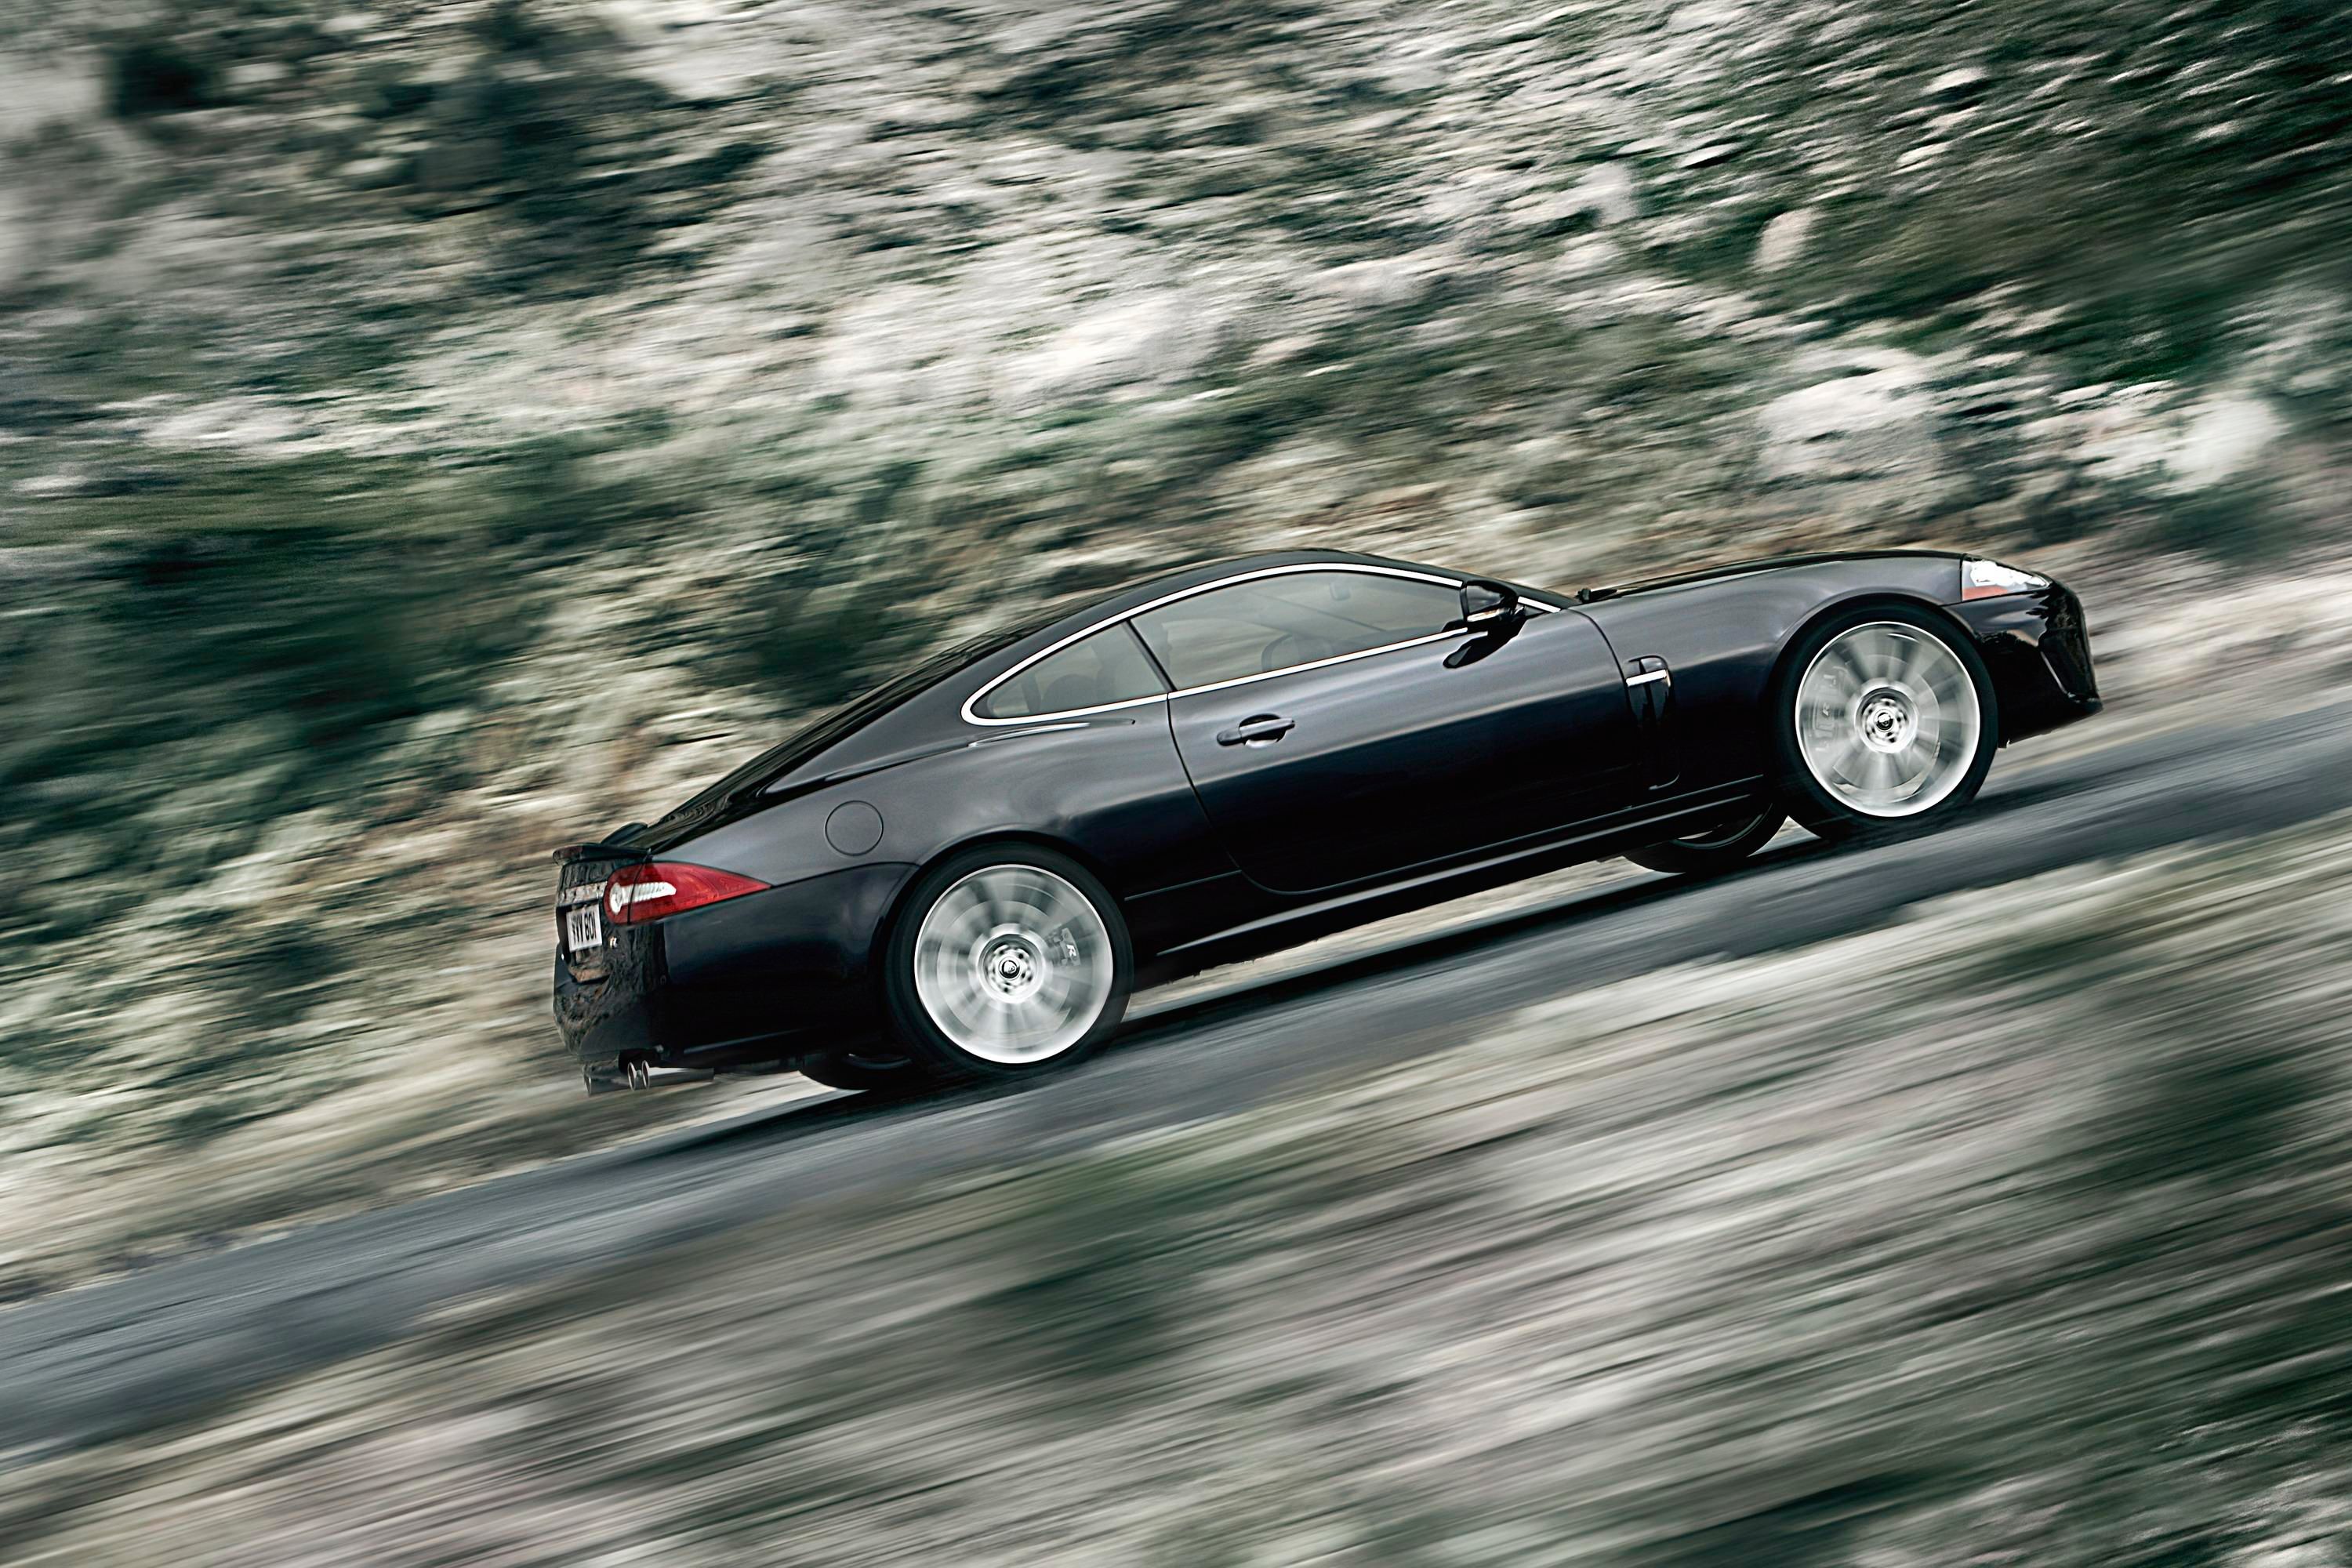 2010 Jaguar XK and XKR